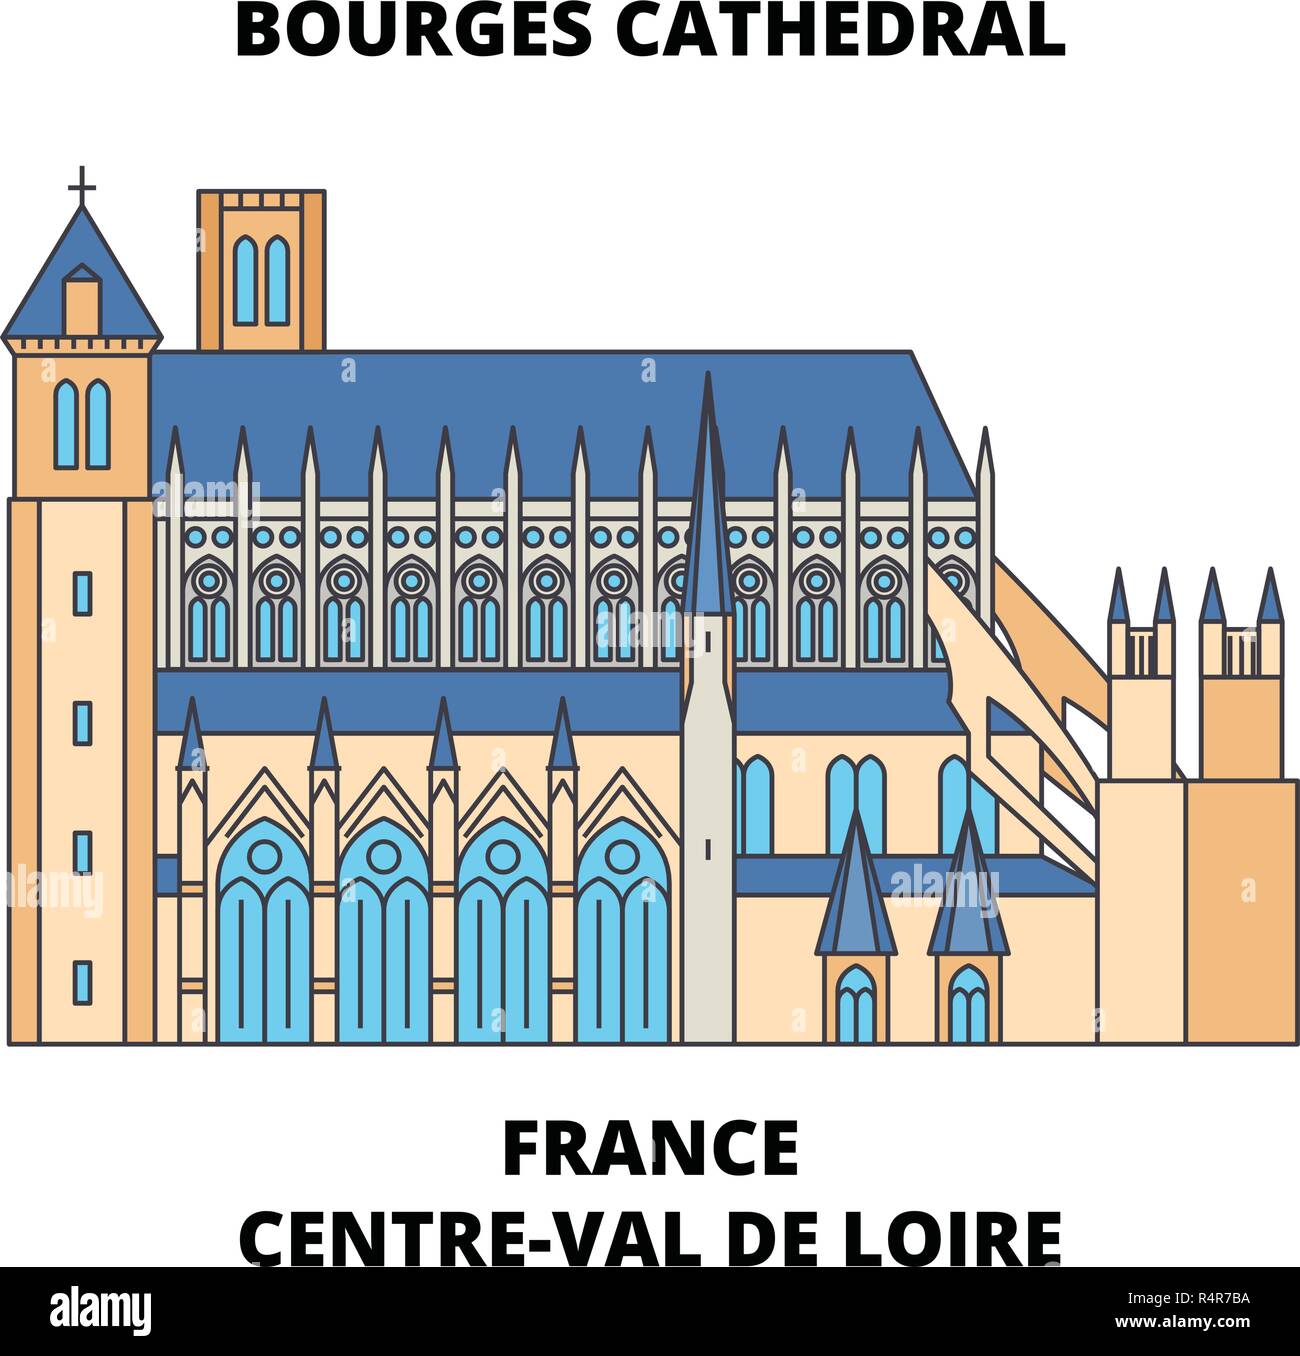 France, Centre-Val De Loire - Bourges Cathedral line travel landmark, skyline, vector design. France, Centre-Val De Loire - Bourges Cathedral linear illustration.  Stock Vector